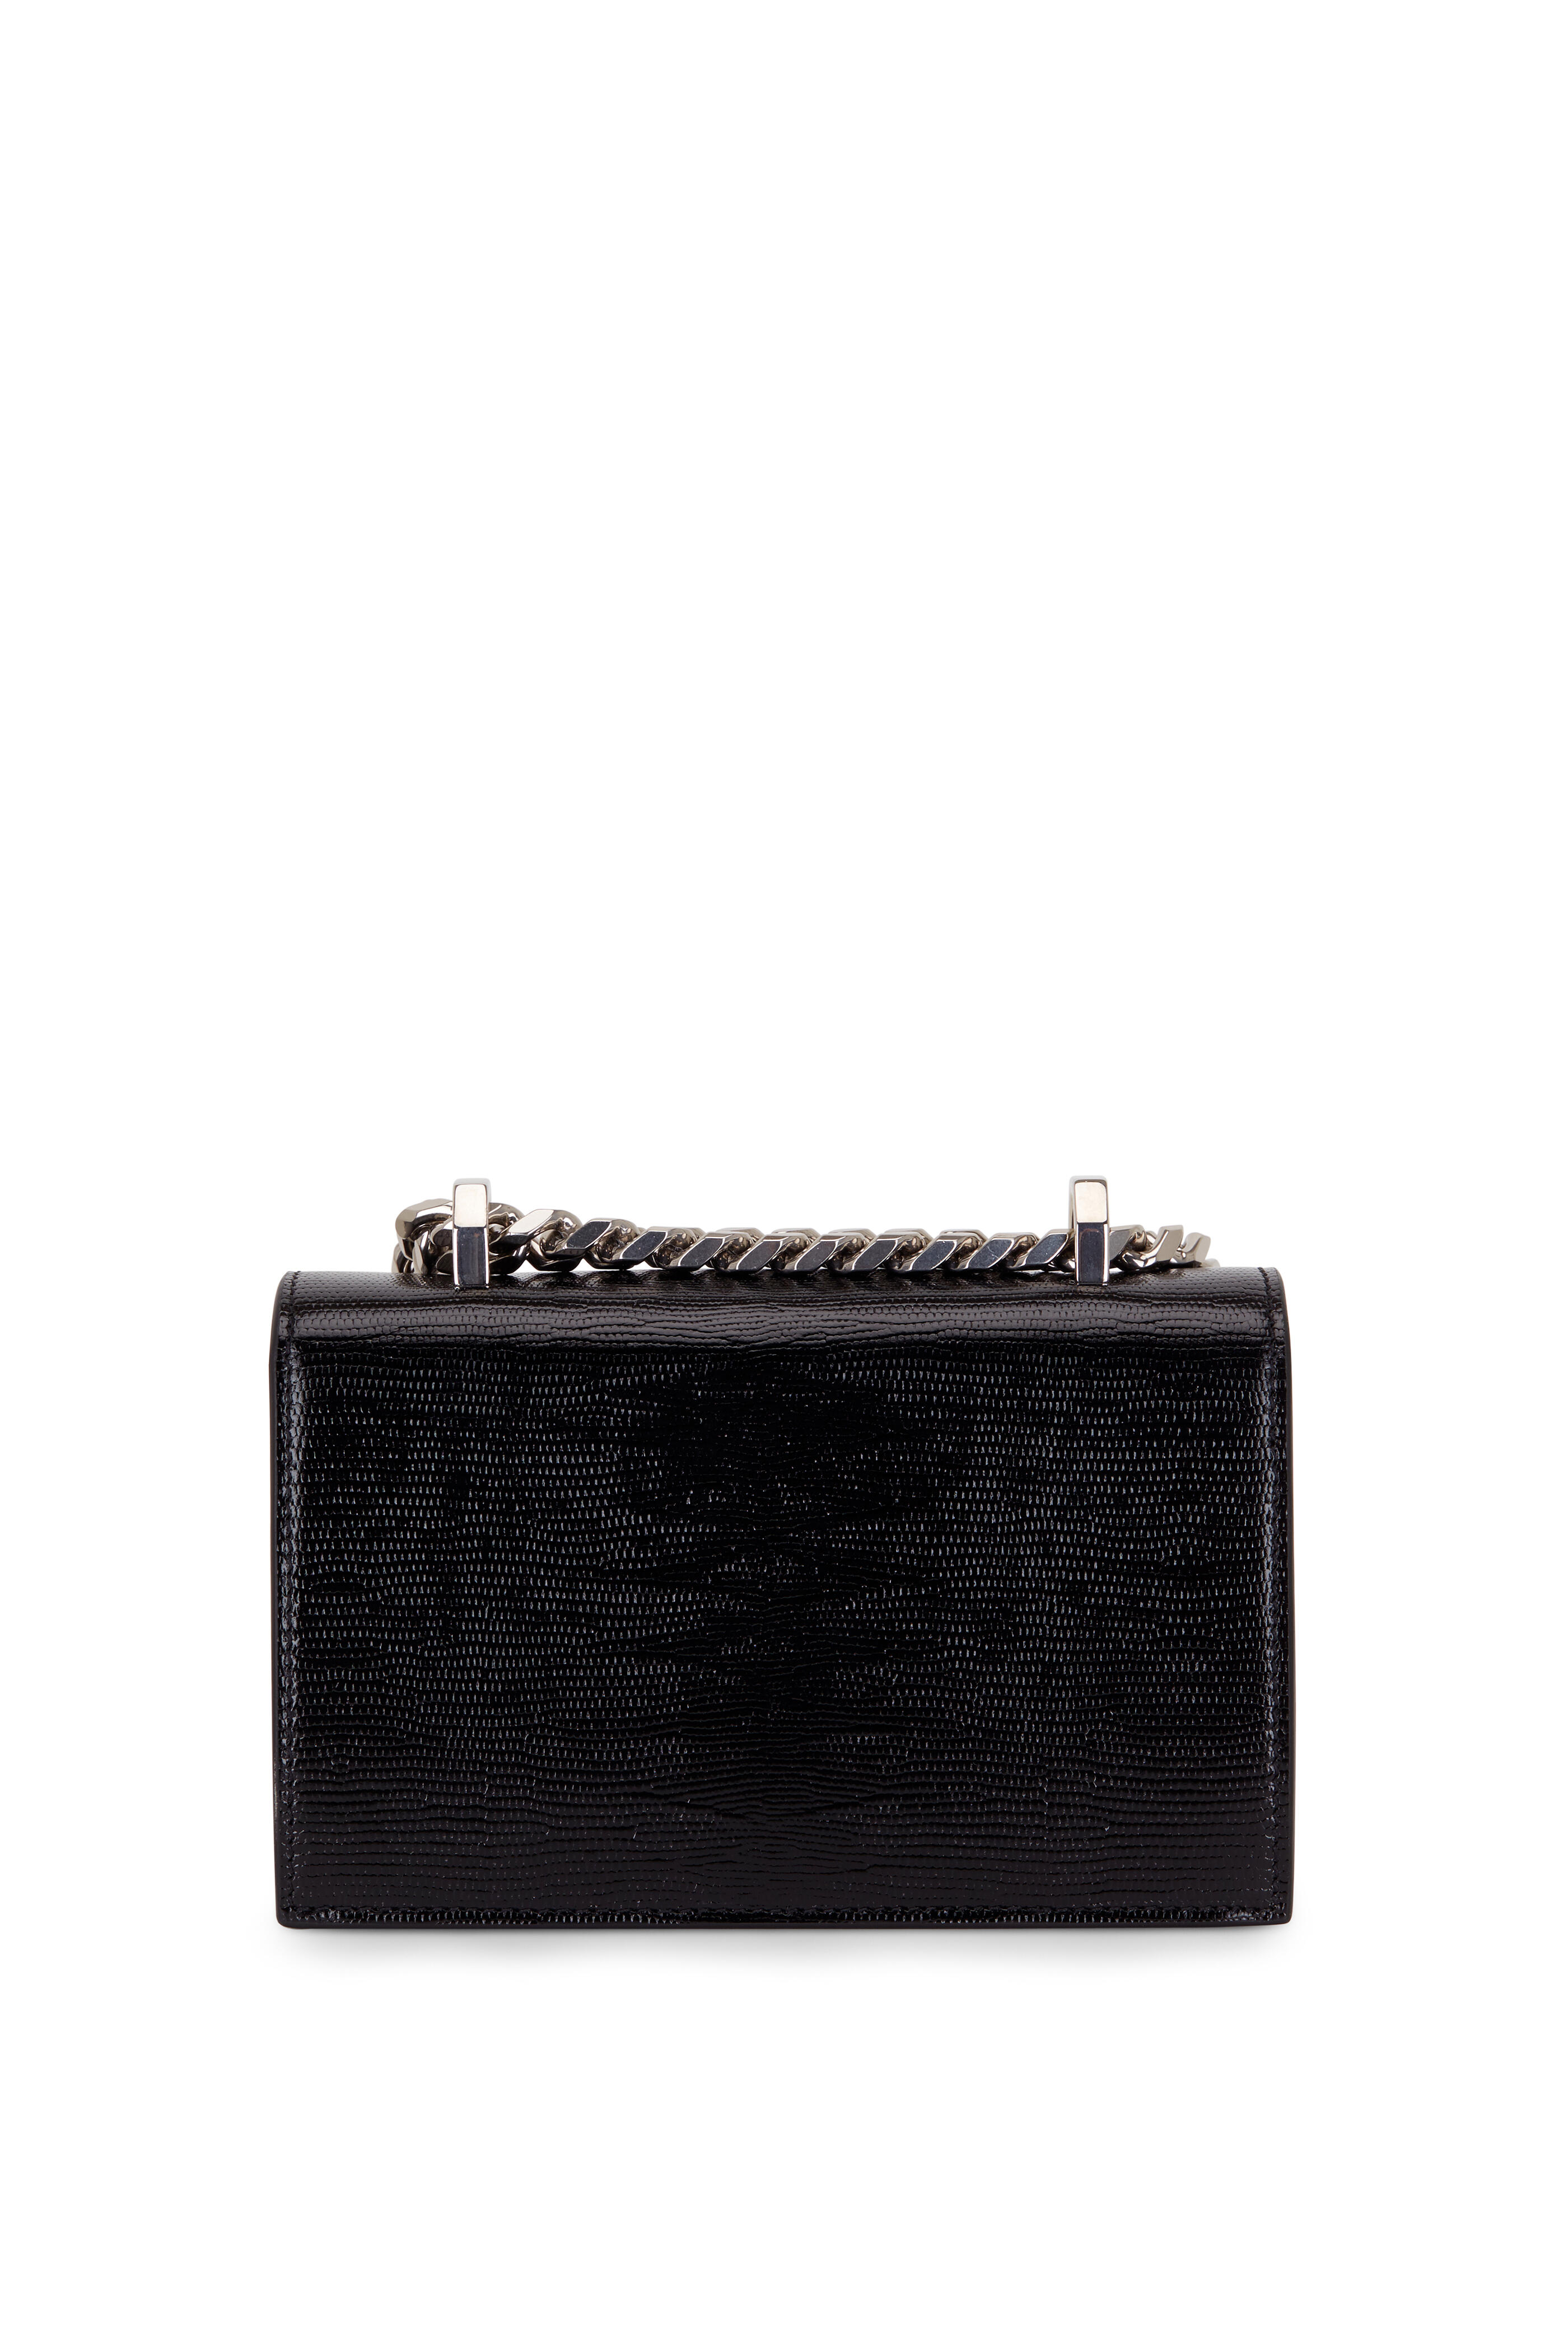 Fendi Lizard Embossed Leather Wallet/Bag on Chain